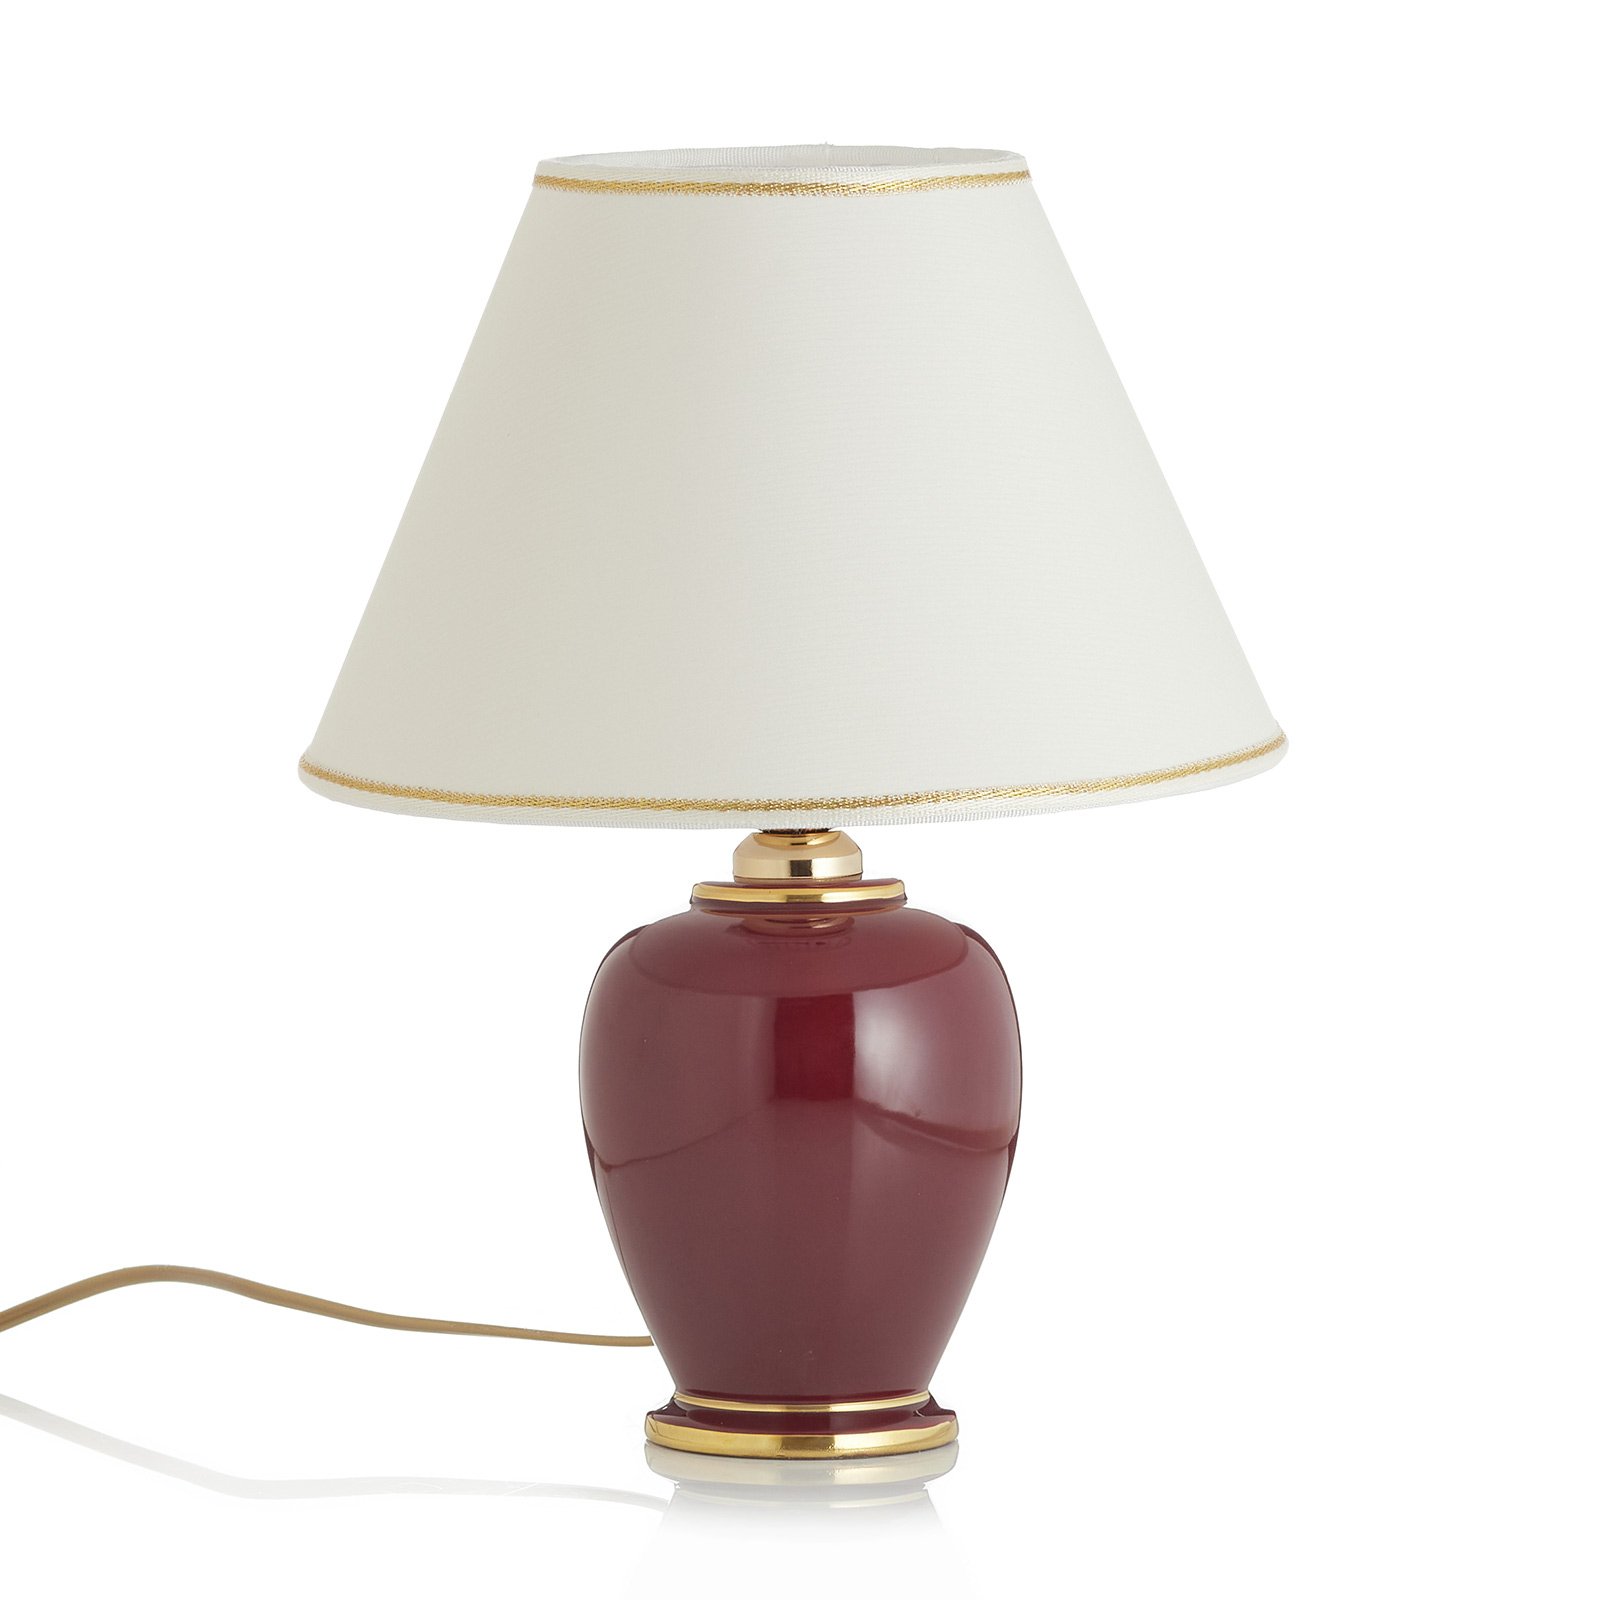 Tafellamp Bordeaux, hoogte 34 cm, diameter 25 cm